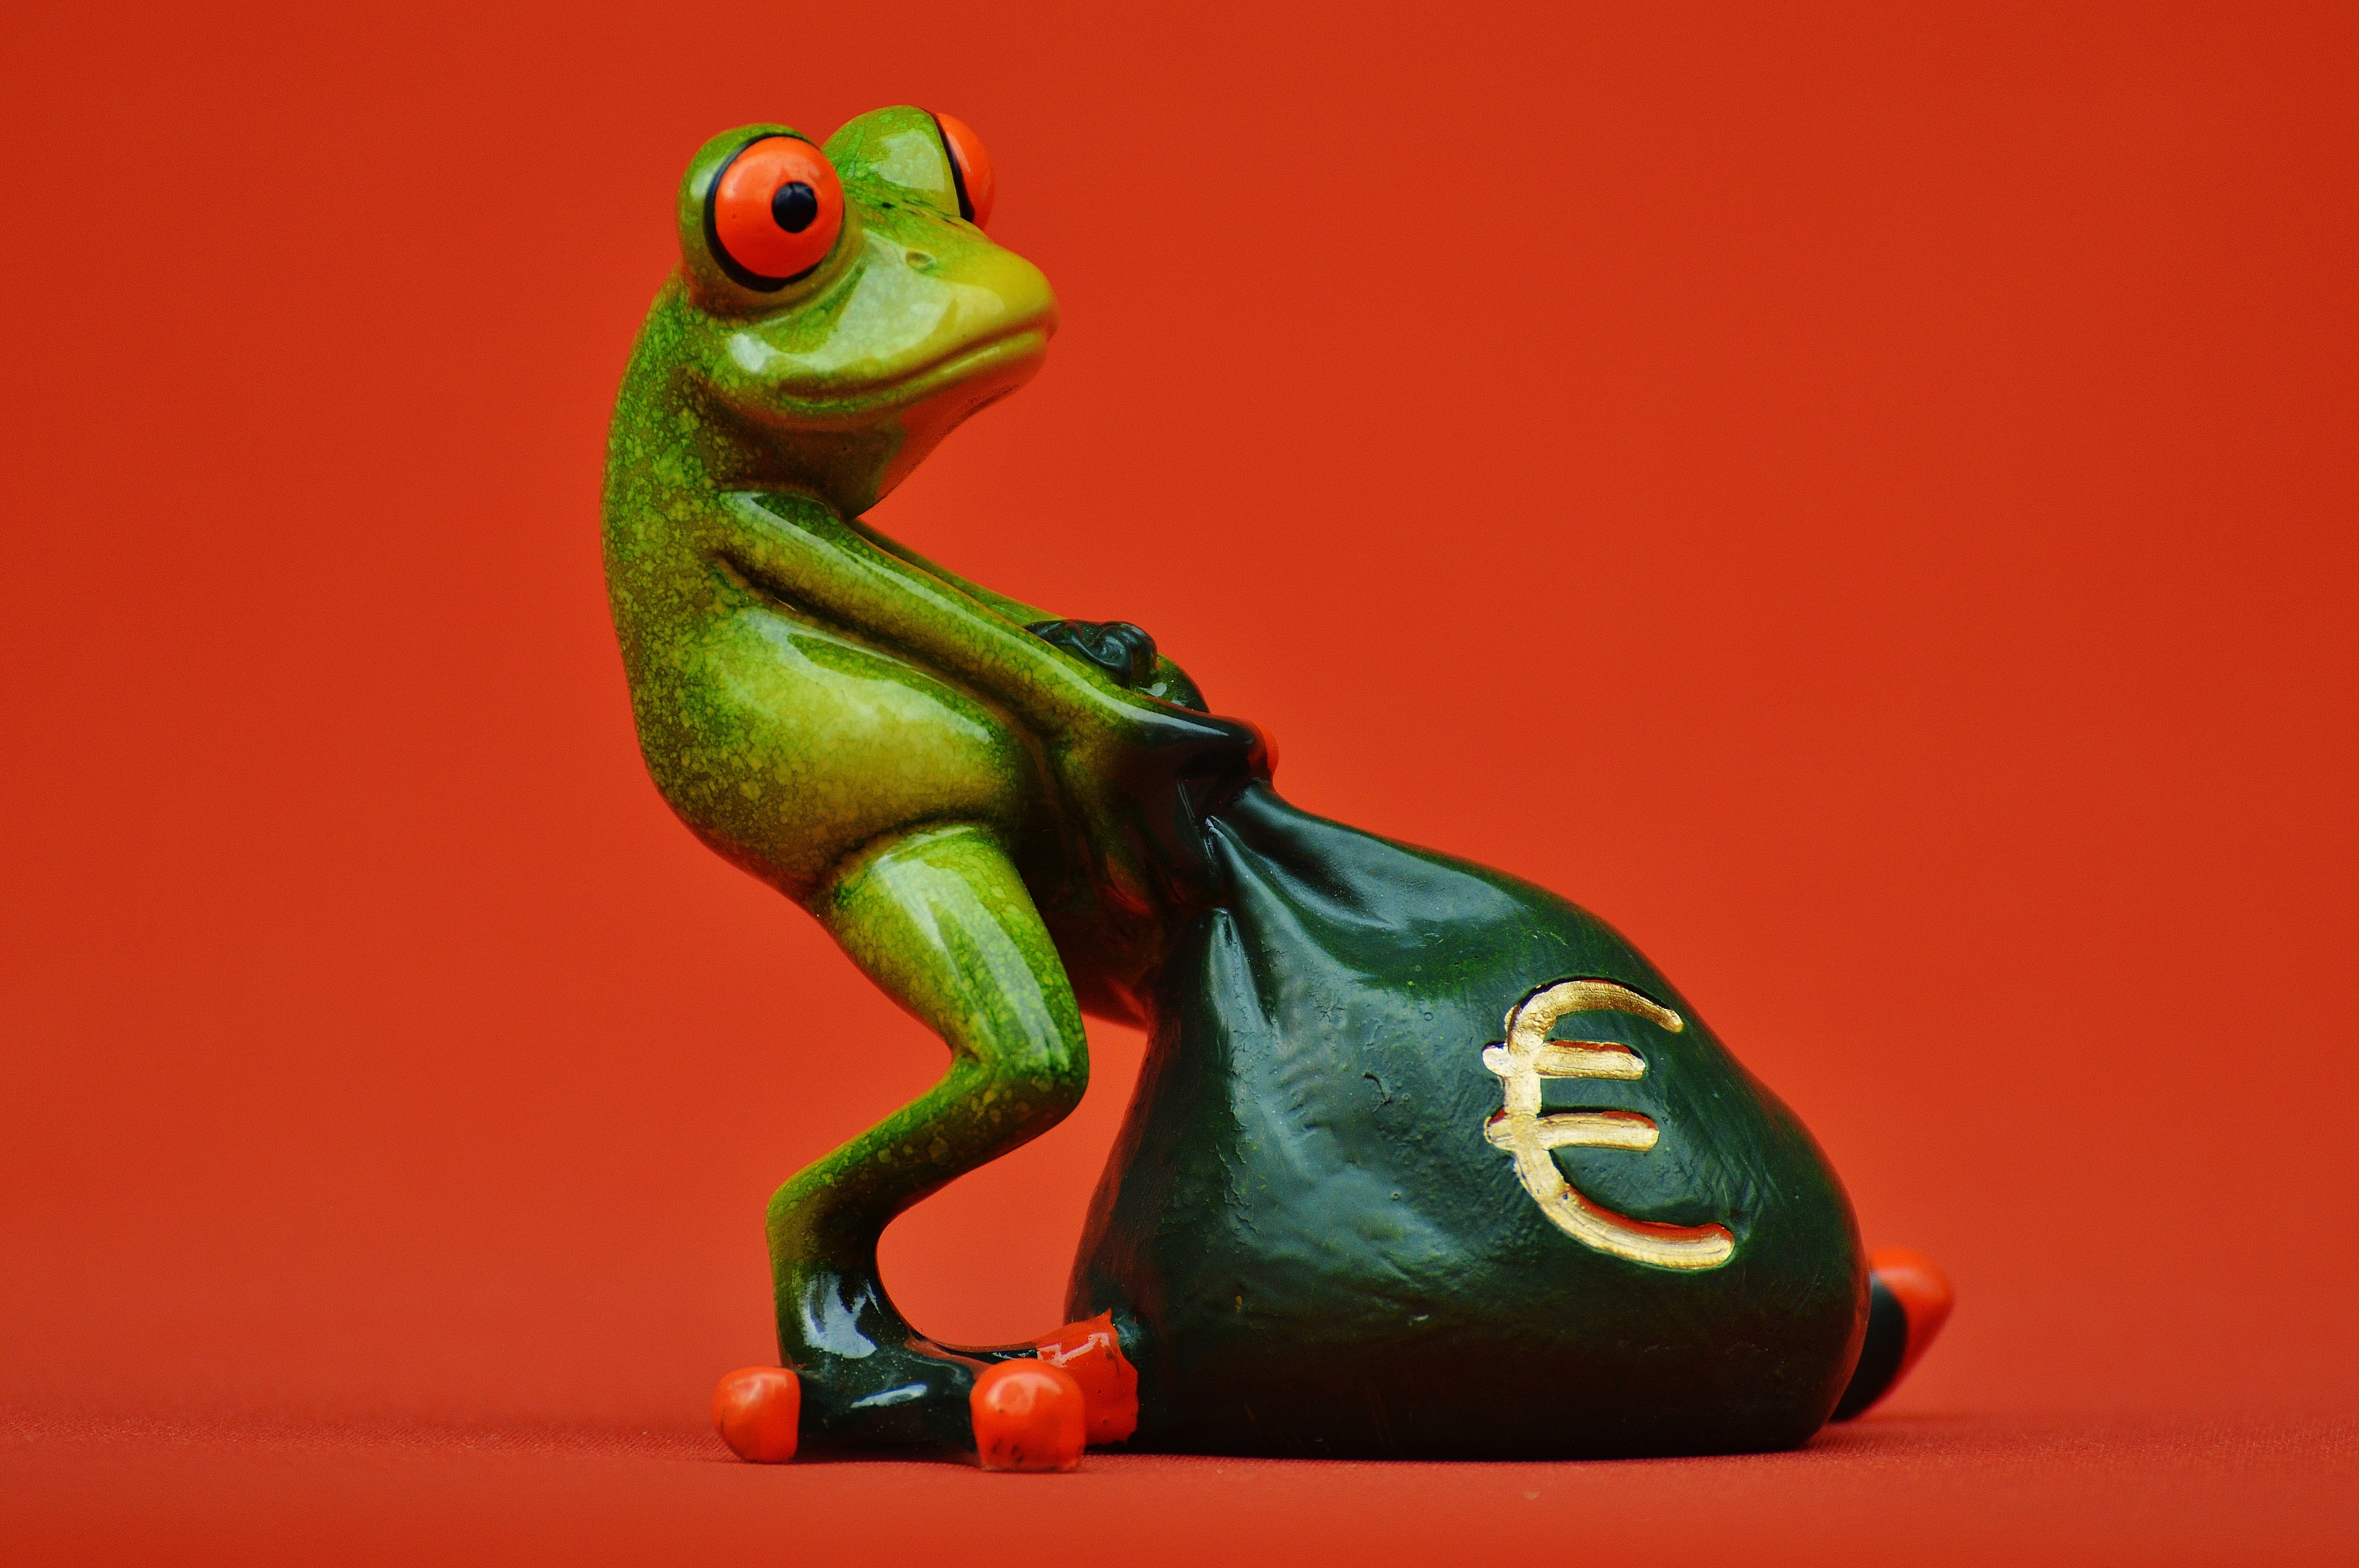 frog, money, euro, bag, money bag, funny, cute, figure, empire